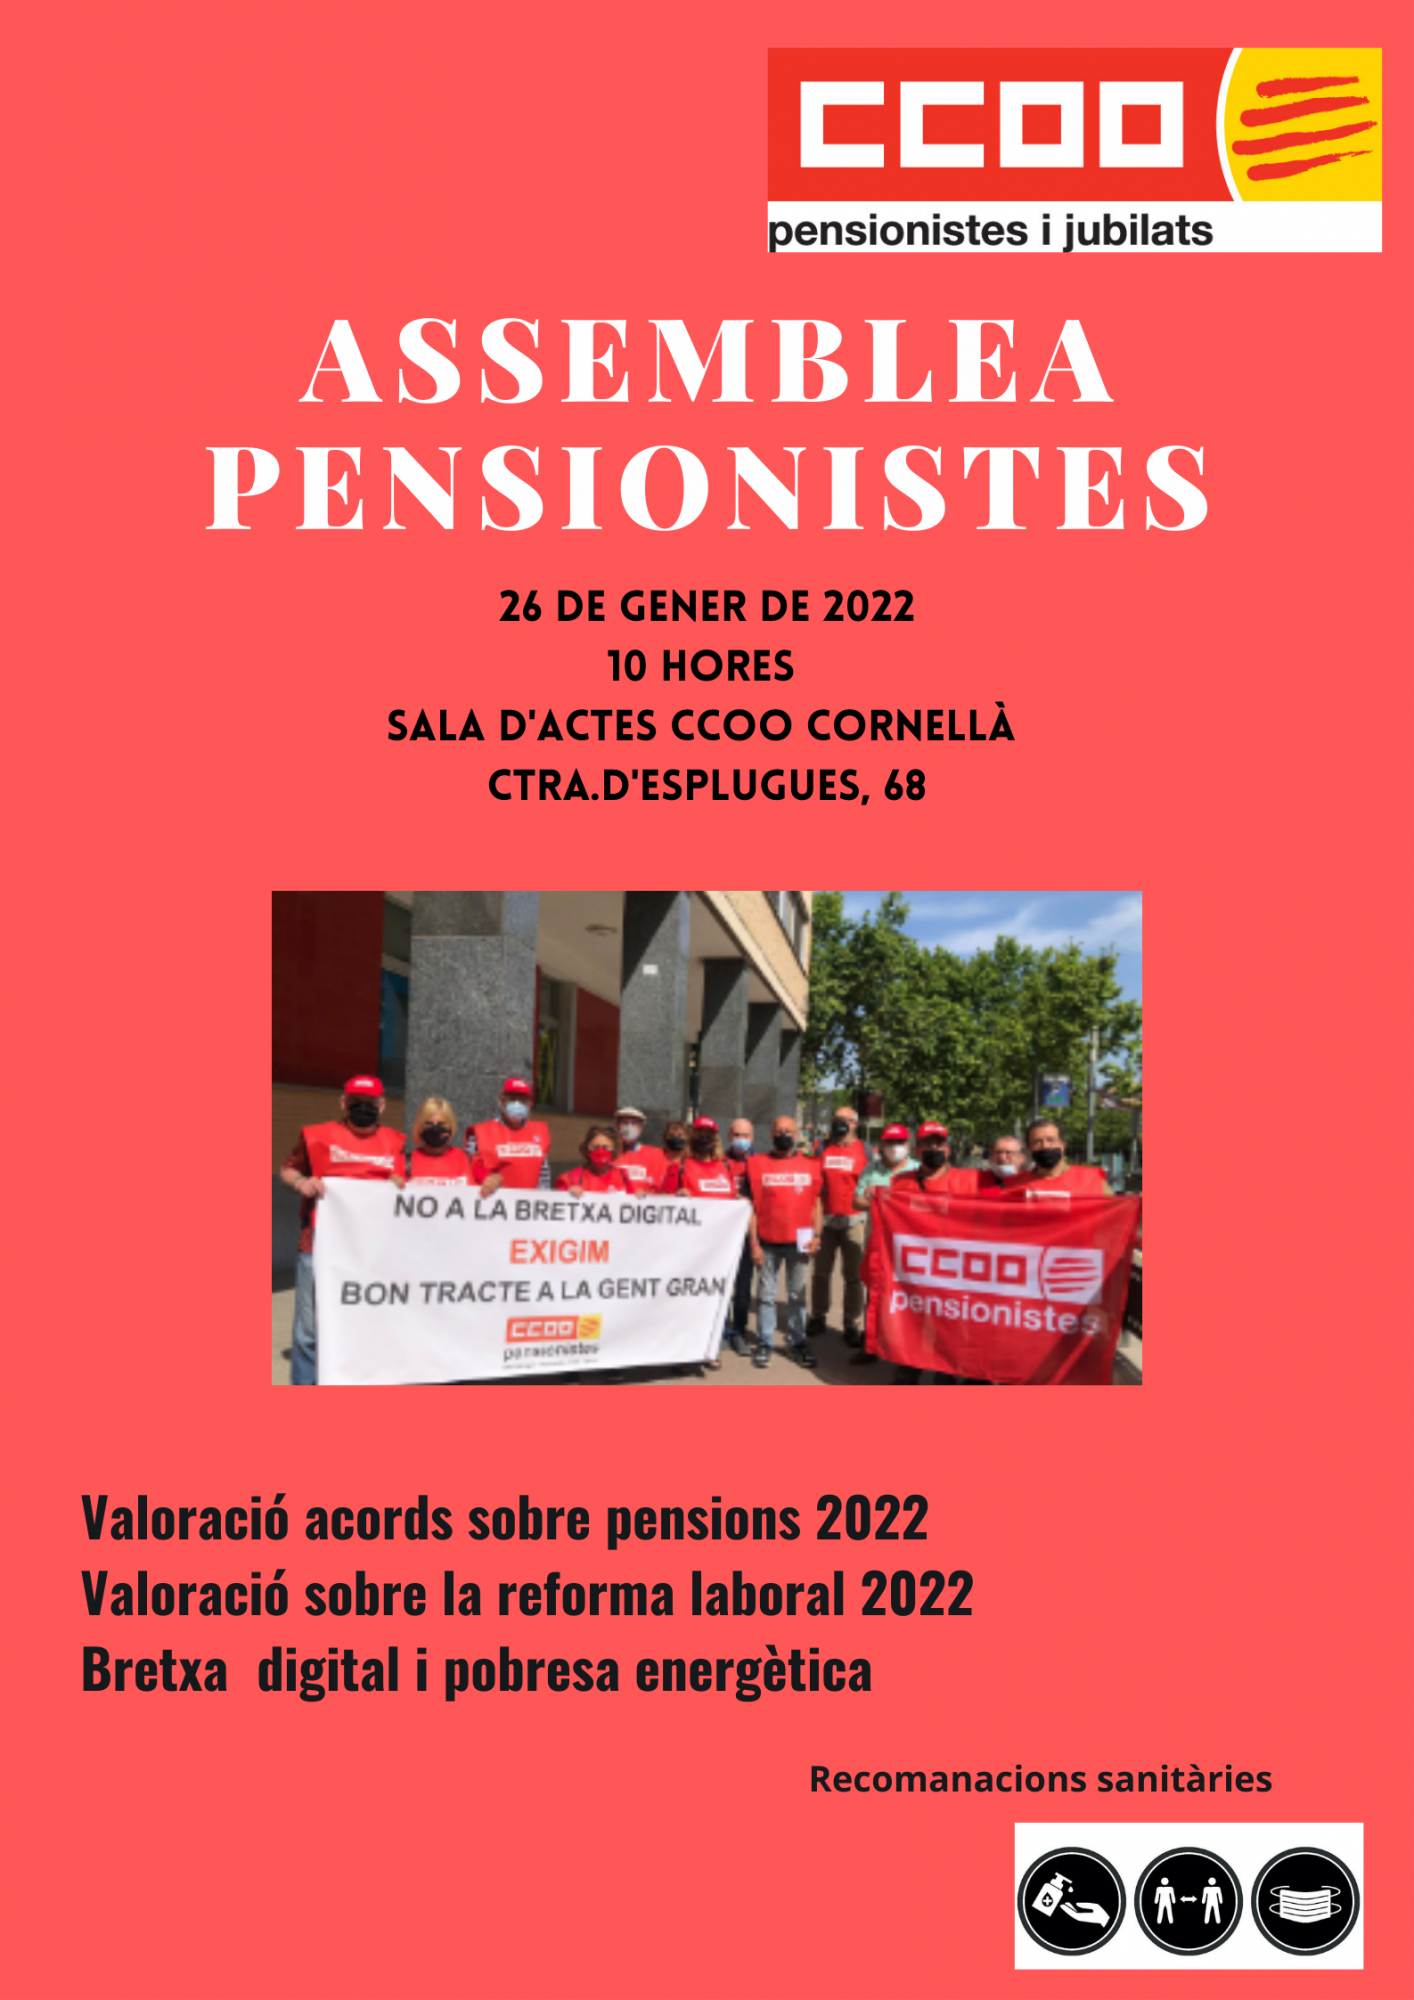 CCOO organiza asambleas para pensionistas en el Baix Llobregat para tratar temas que afectan al colectivo